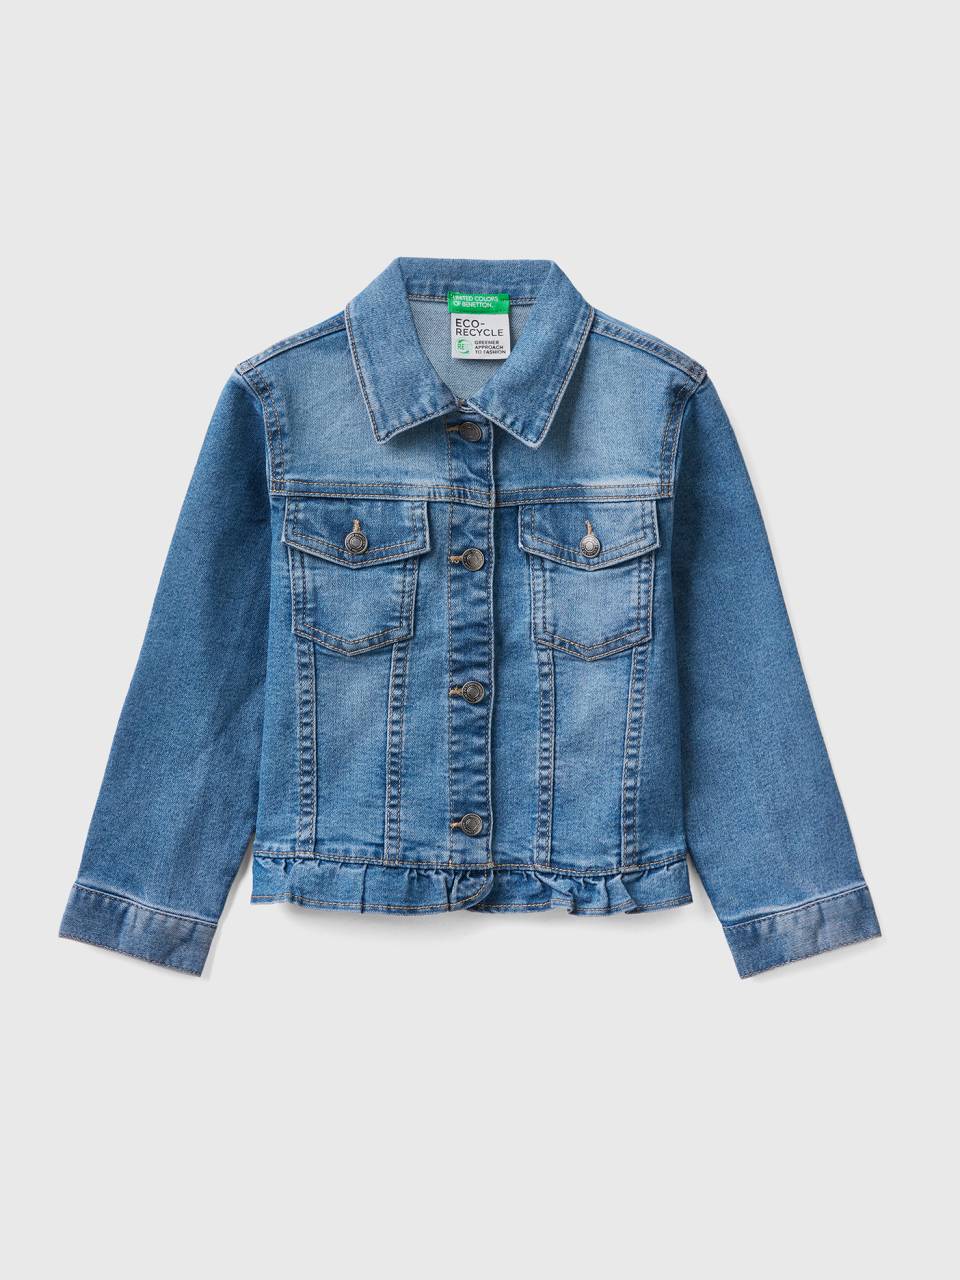 Benetton "eco-recycle" jean jacket. 1